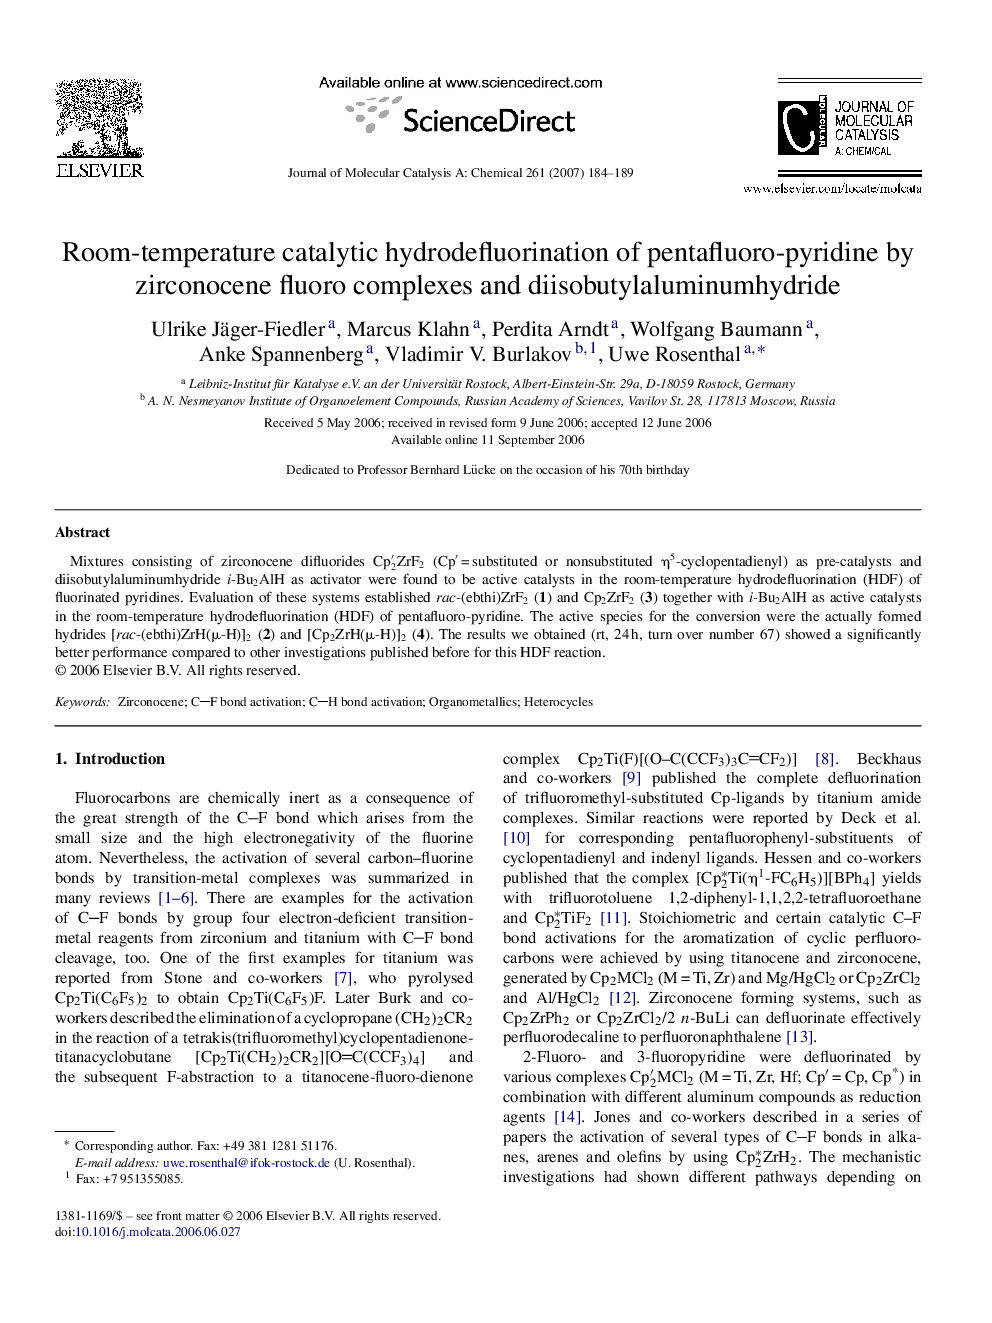 Room-temperature catalytic hydrodefluorination of pentafluoro-pyridine by zirconocene fluoro complexes and diisobutylaluminumhydride